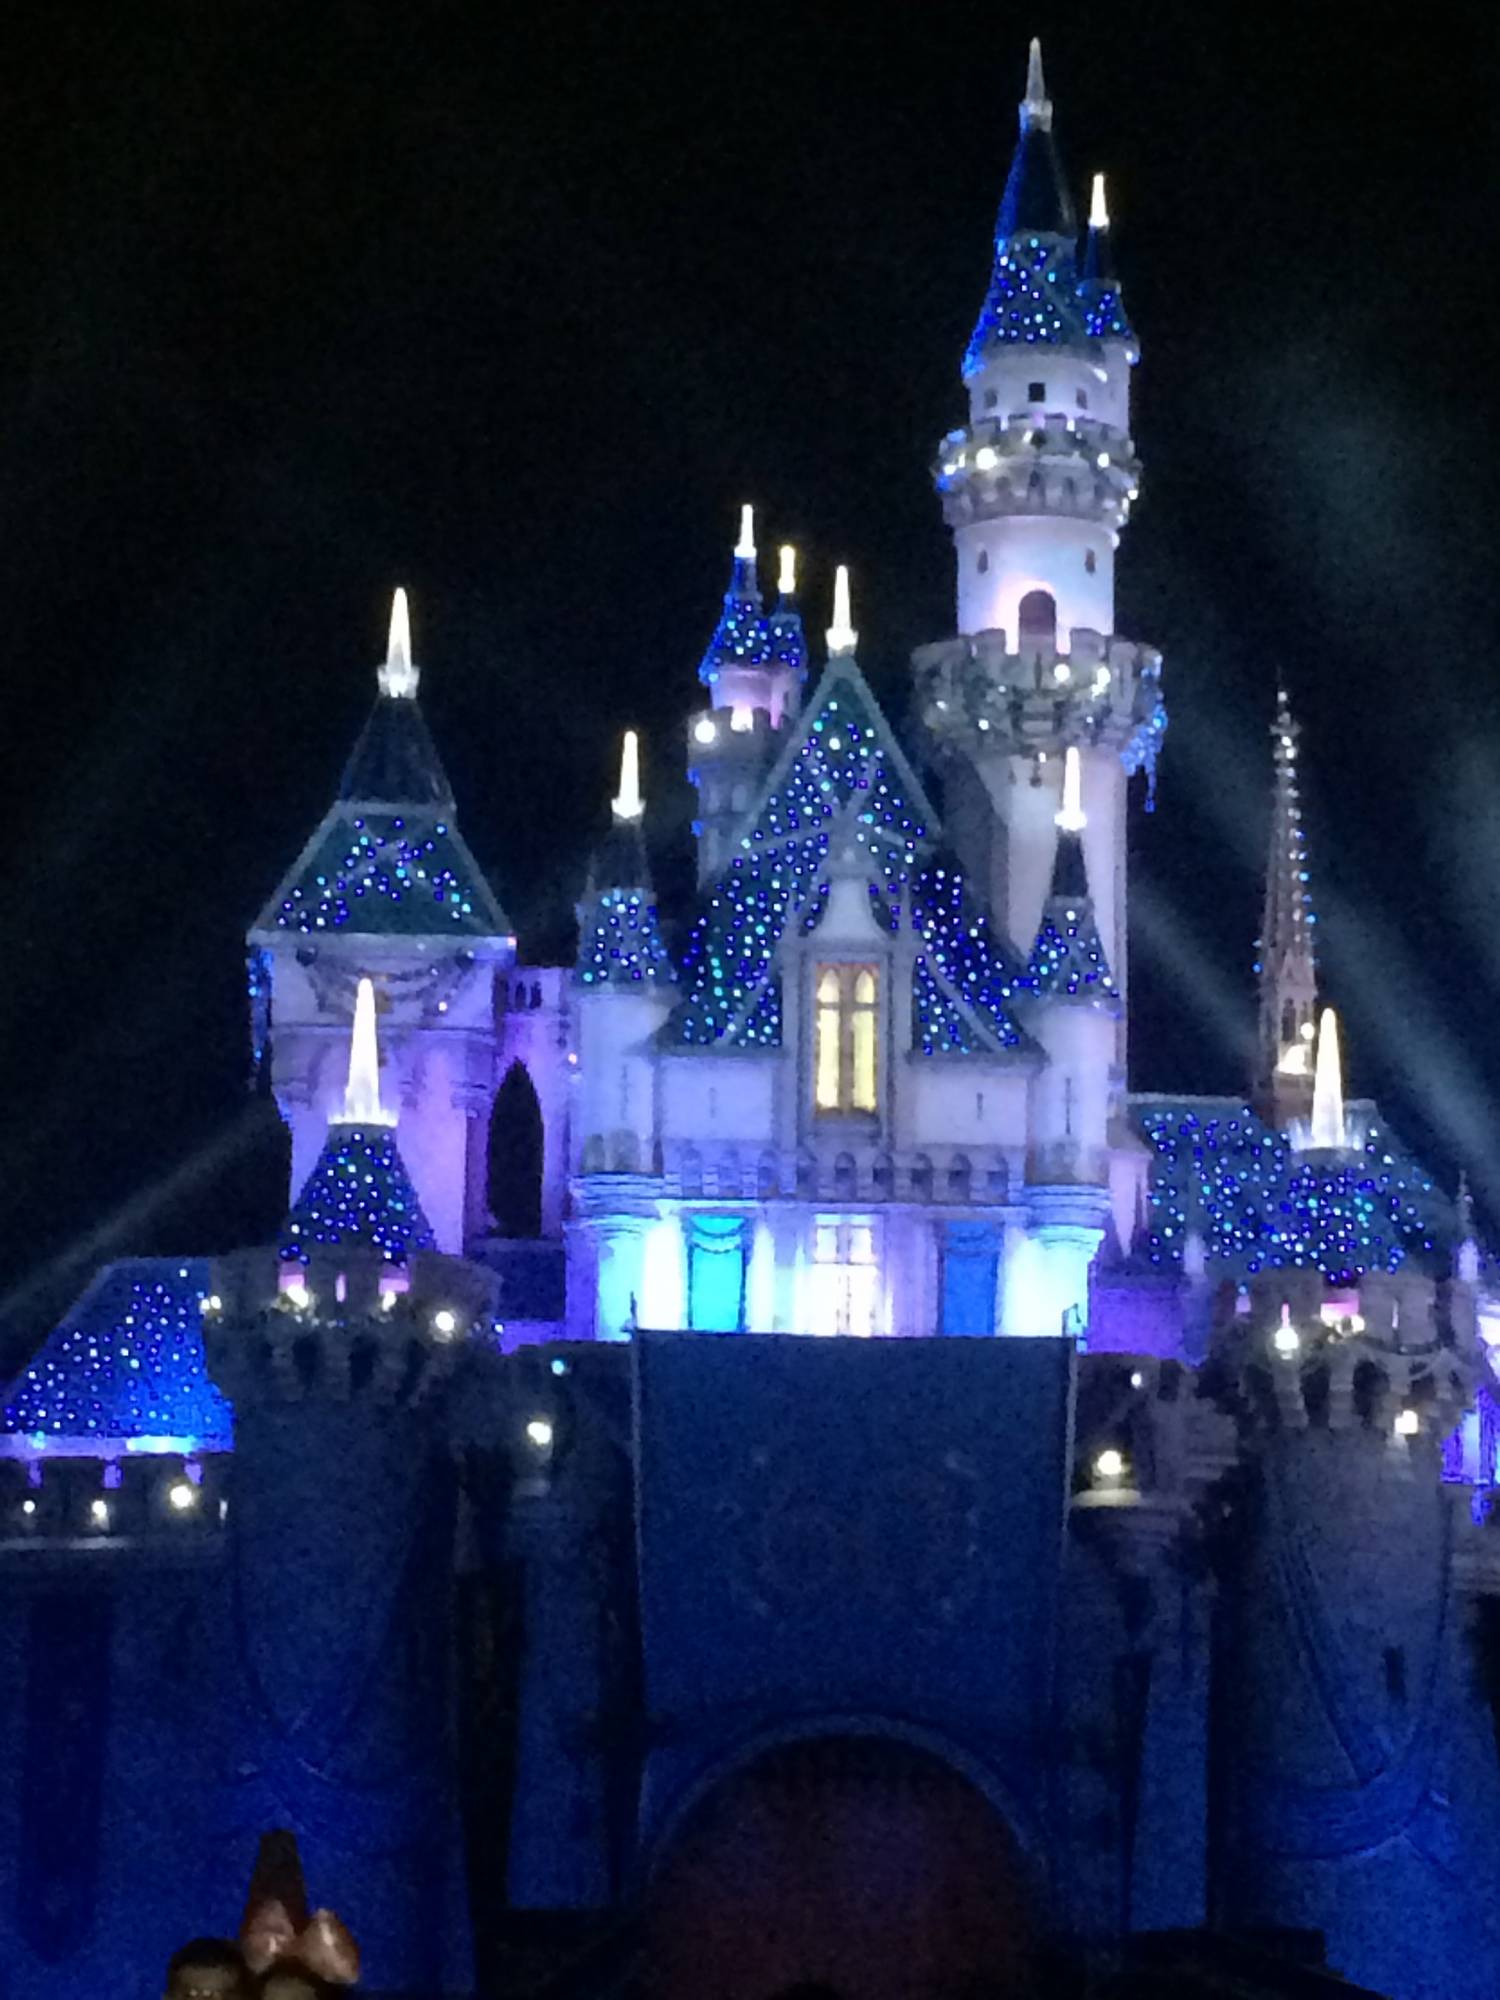 Choosing to visit Disneyland instead of Walt Disney World |PassPorter.com